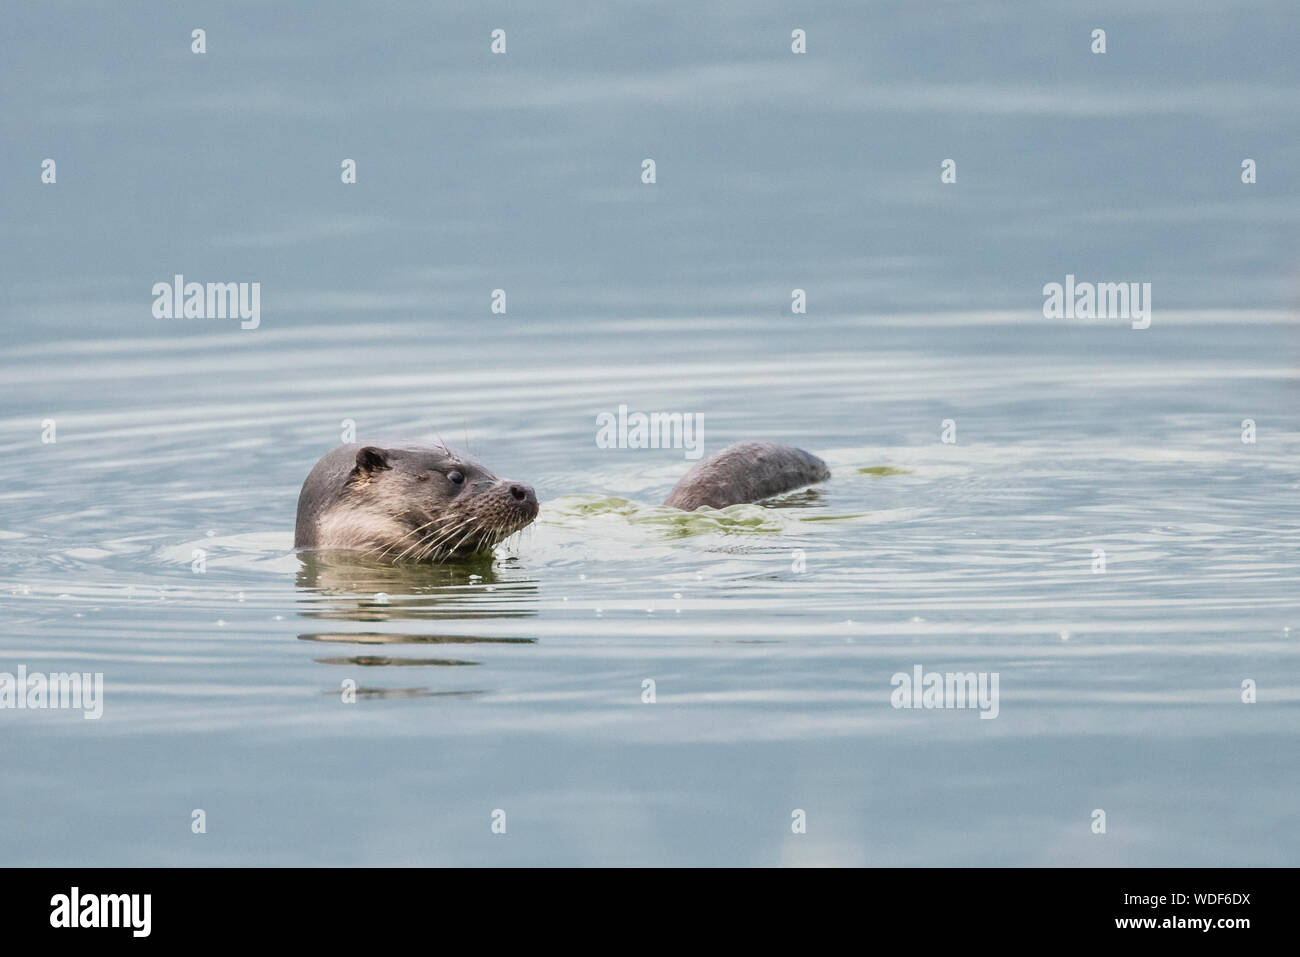 Otter swimming in Cresswell Northumberland, tête et queue montrant hors de l'eau. Banque D'Images